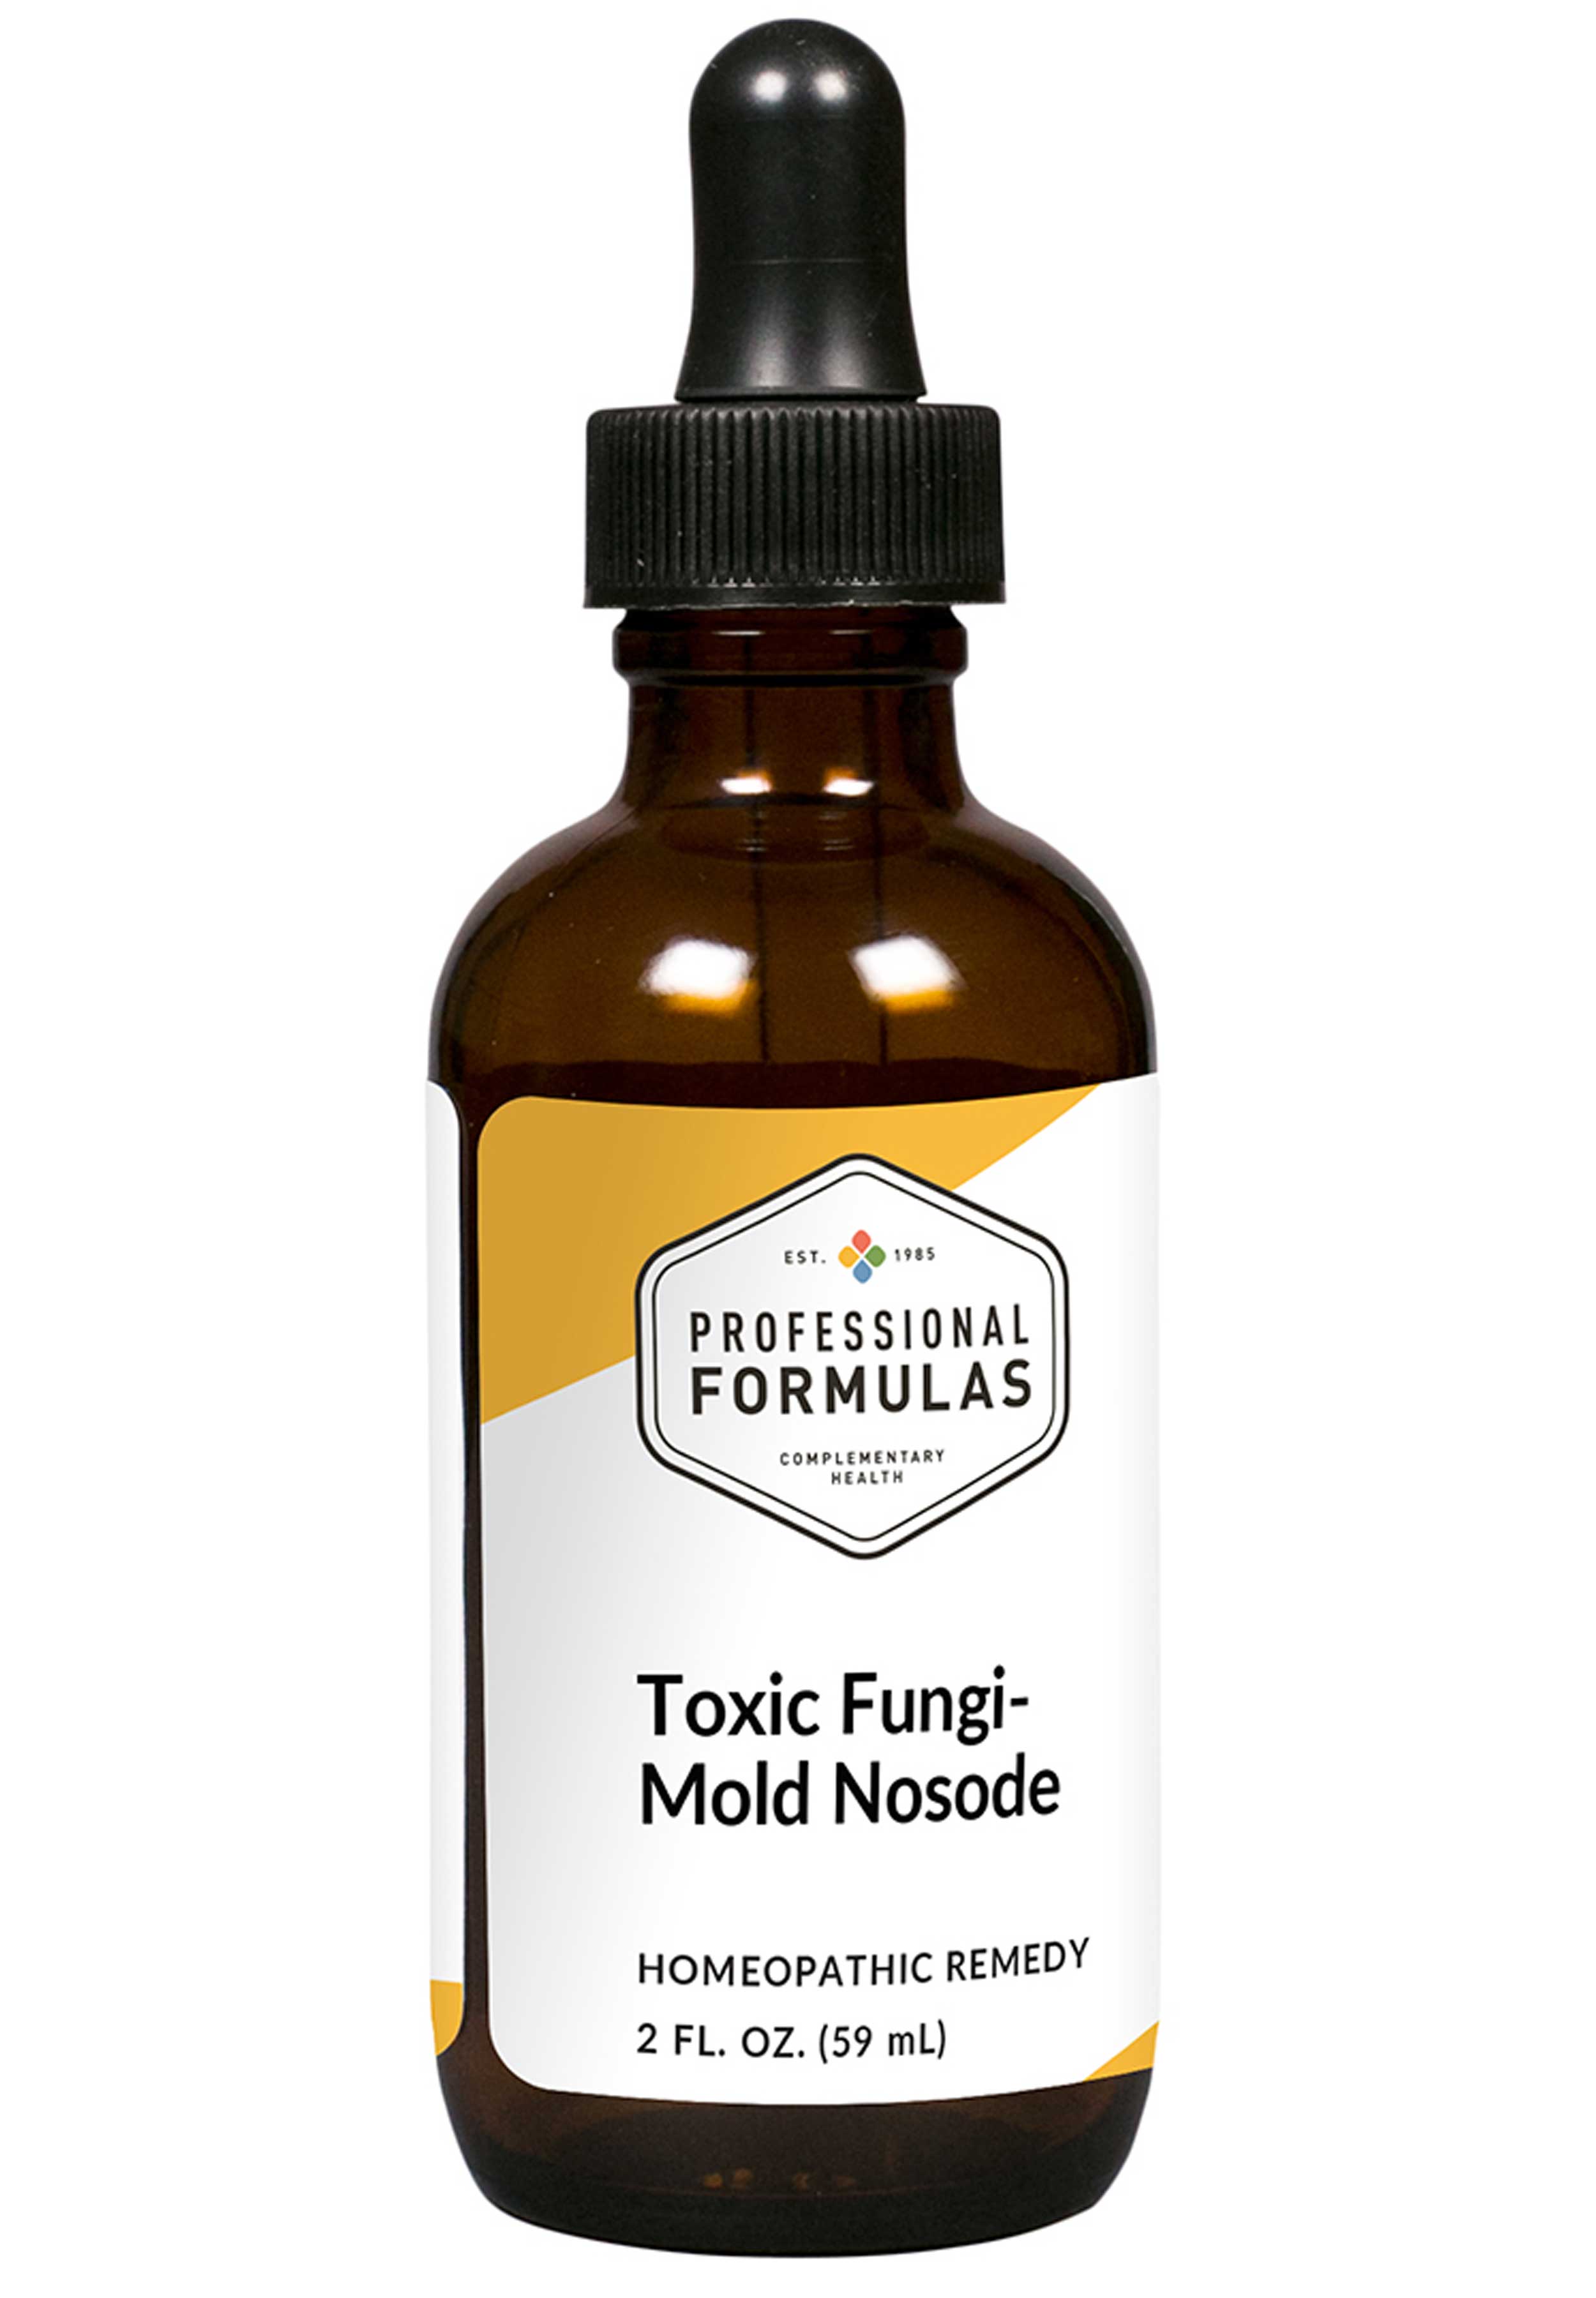 Professional Formulas Toxic Fungi- Mold Nosode